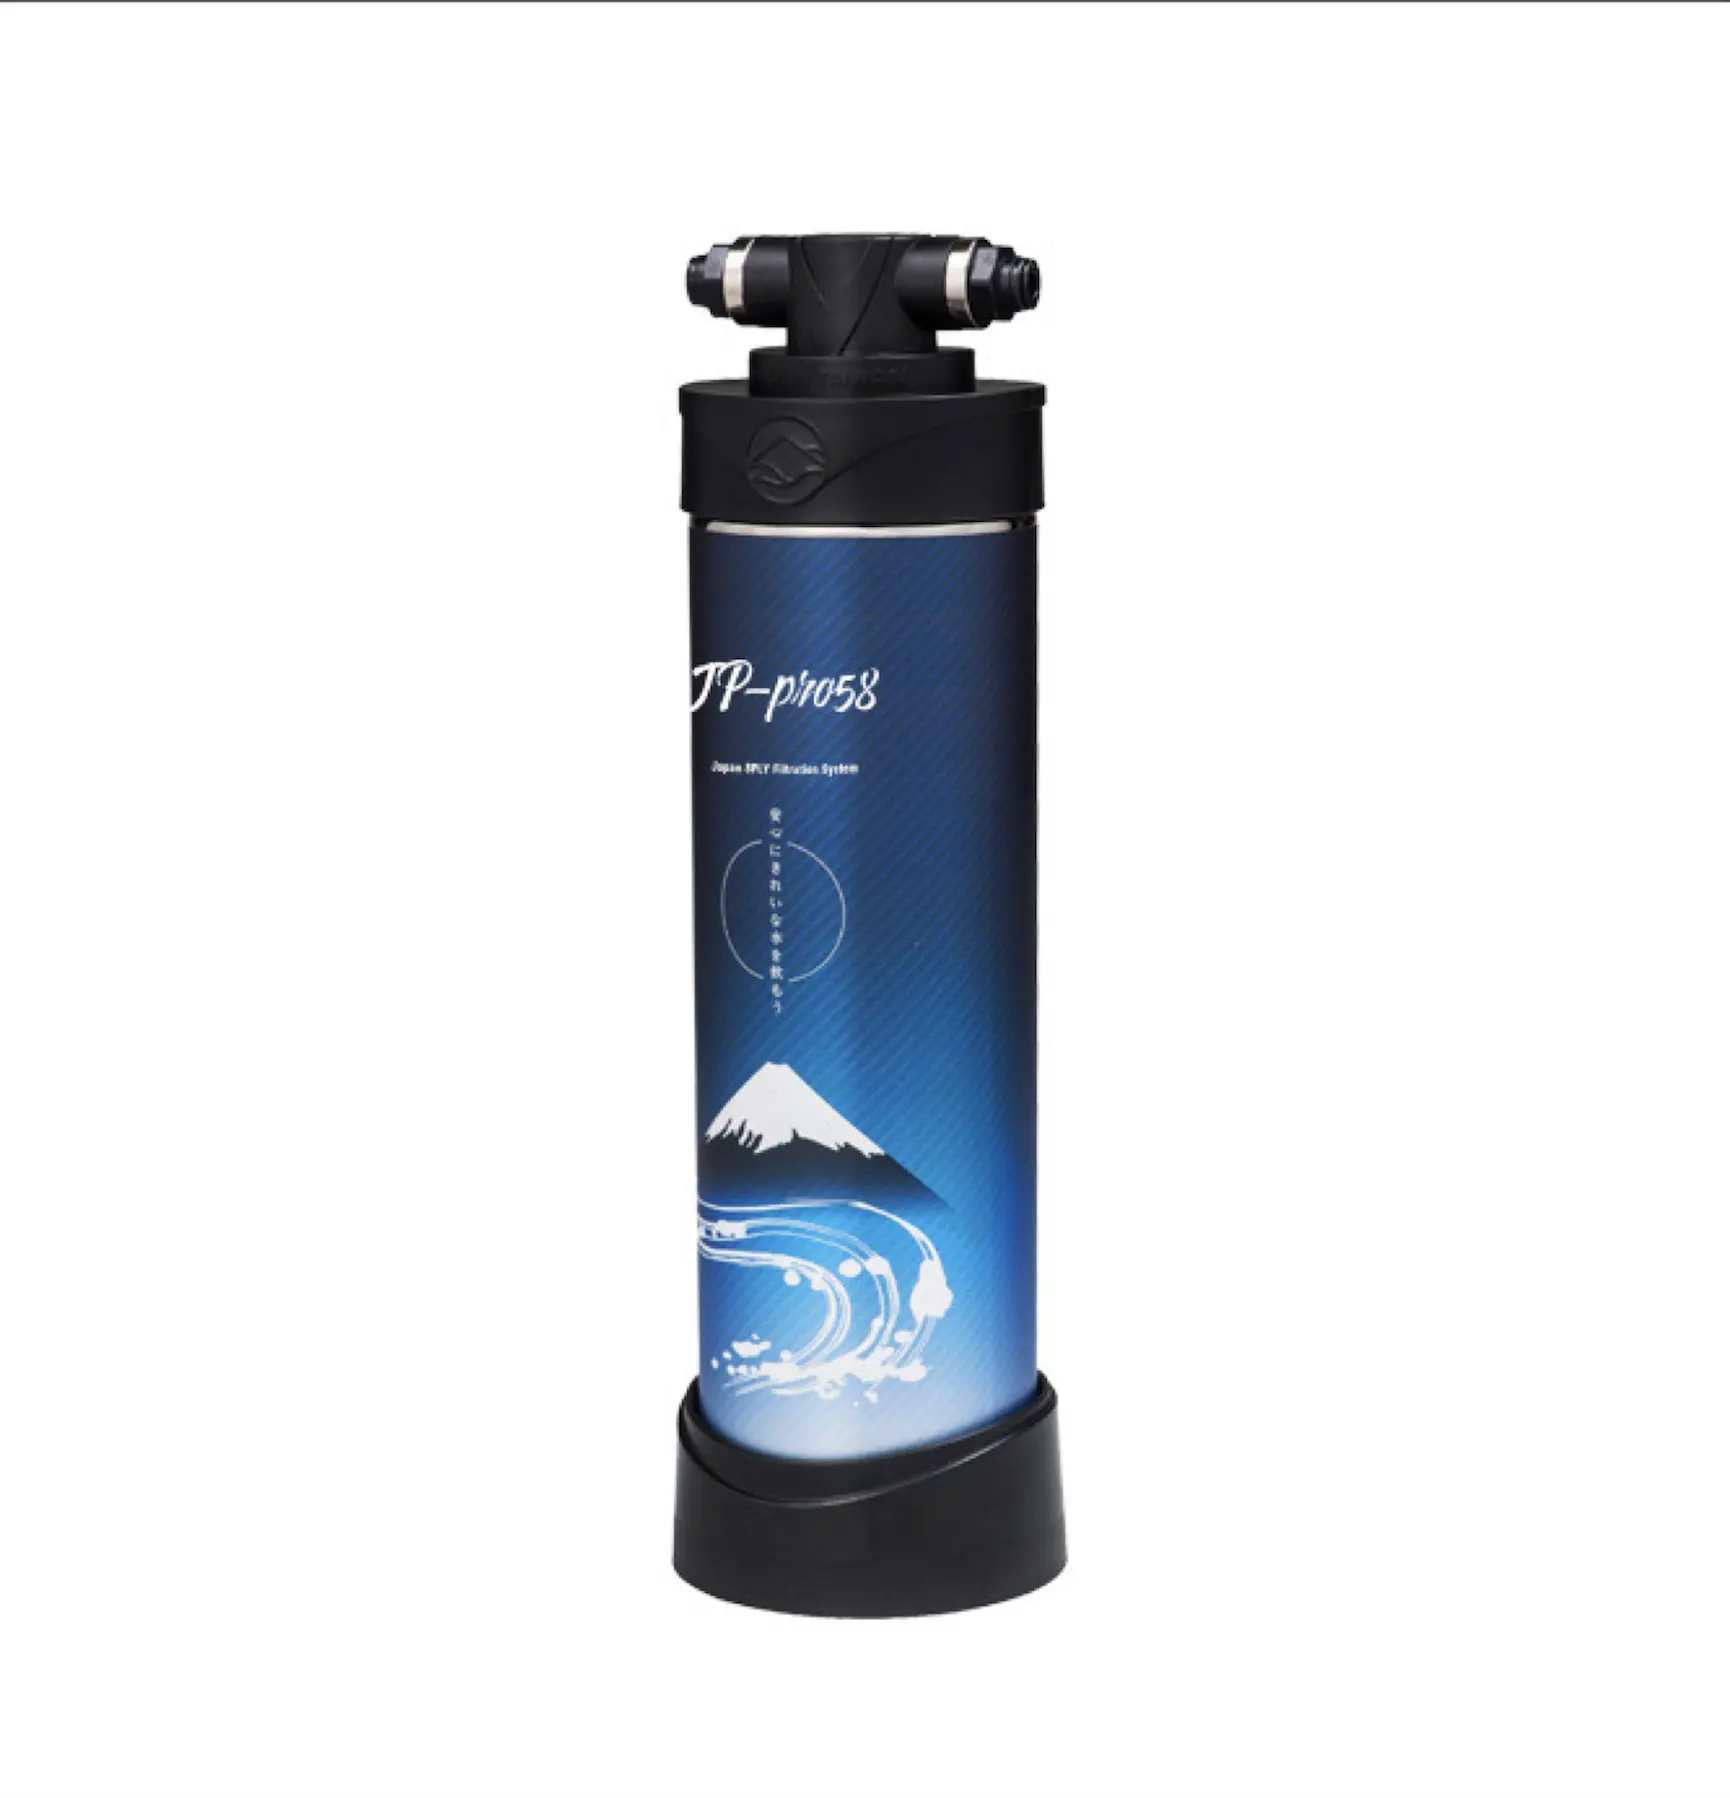 RO Water Purifier For Plumbing And Fixtures purified water vending machine 20